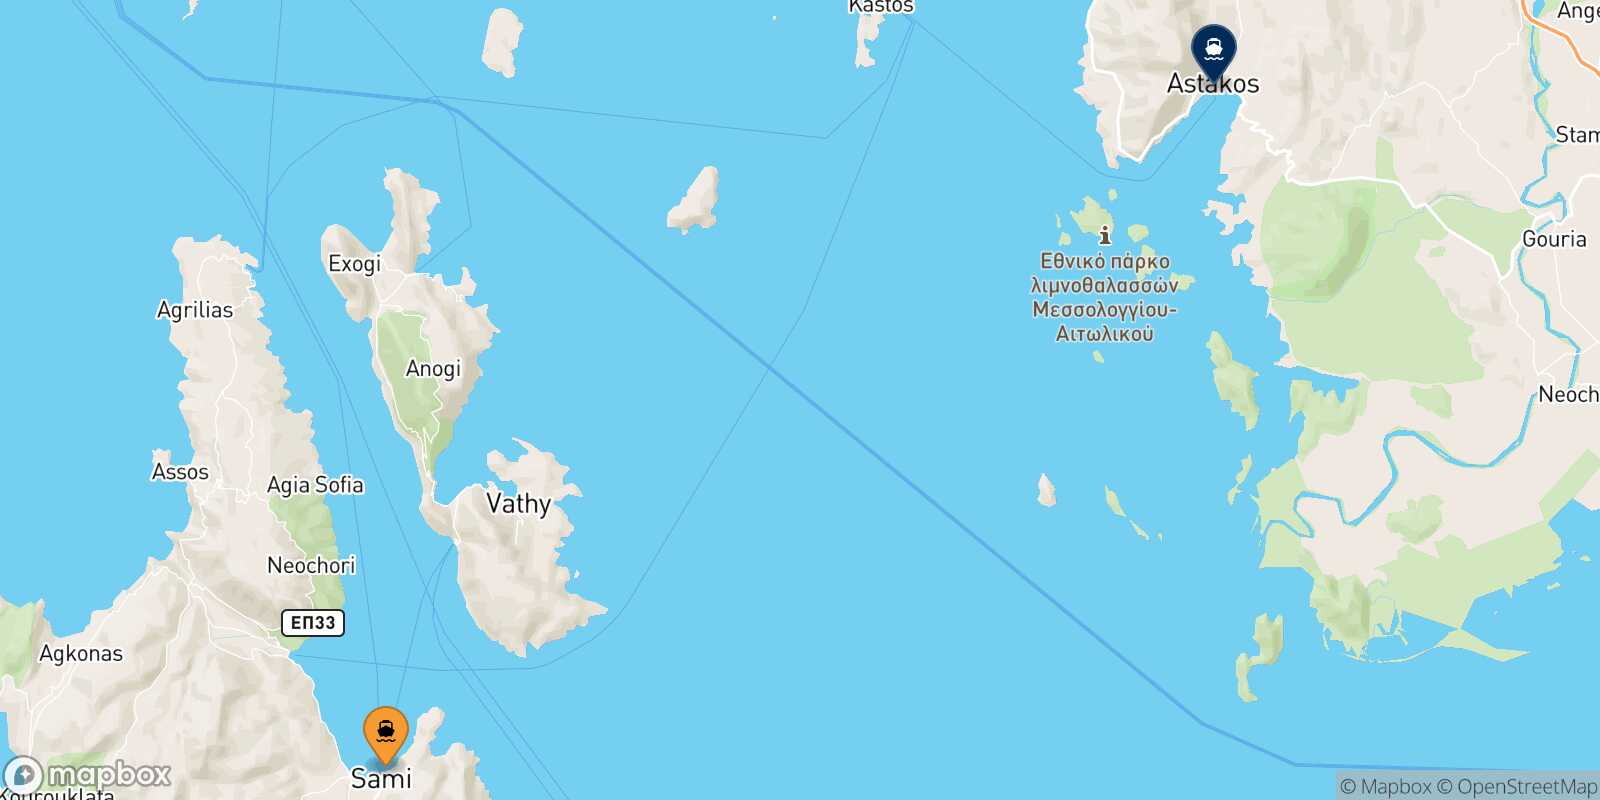 Sami (Kefalonia) Astakos route map